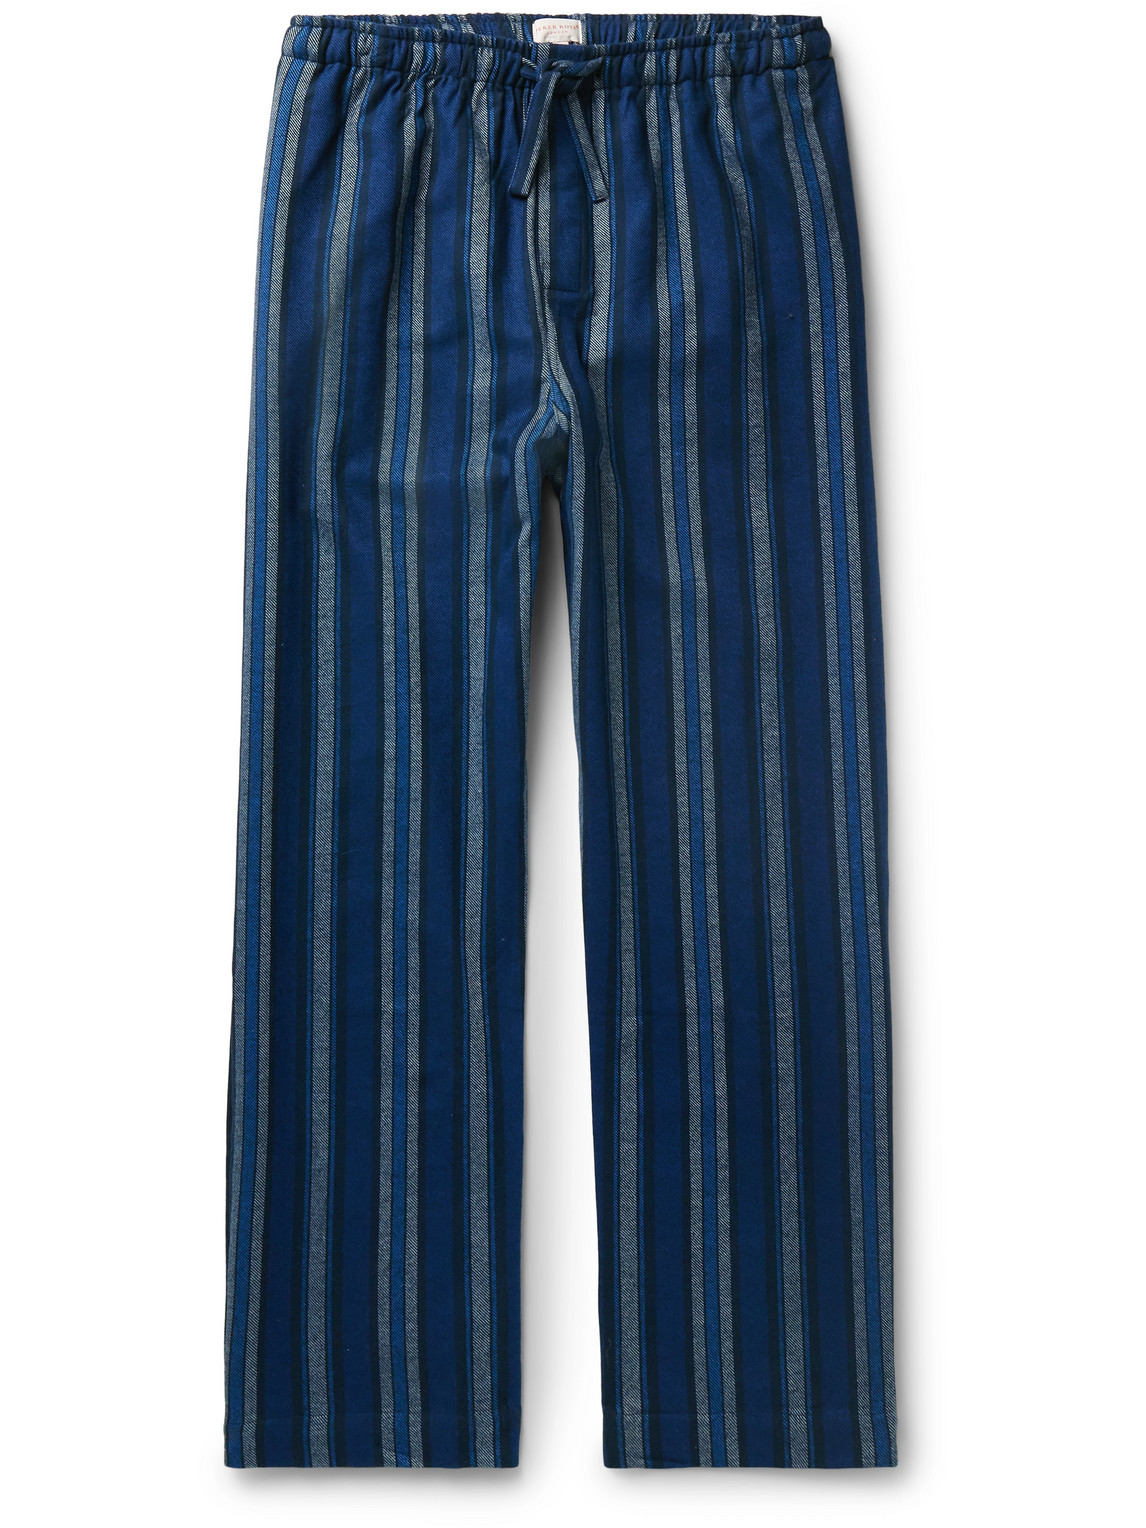 Kelburn 38 Striped Brushed Cotton-Flannel Pyjama Trousers